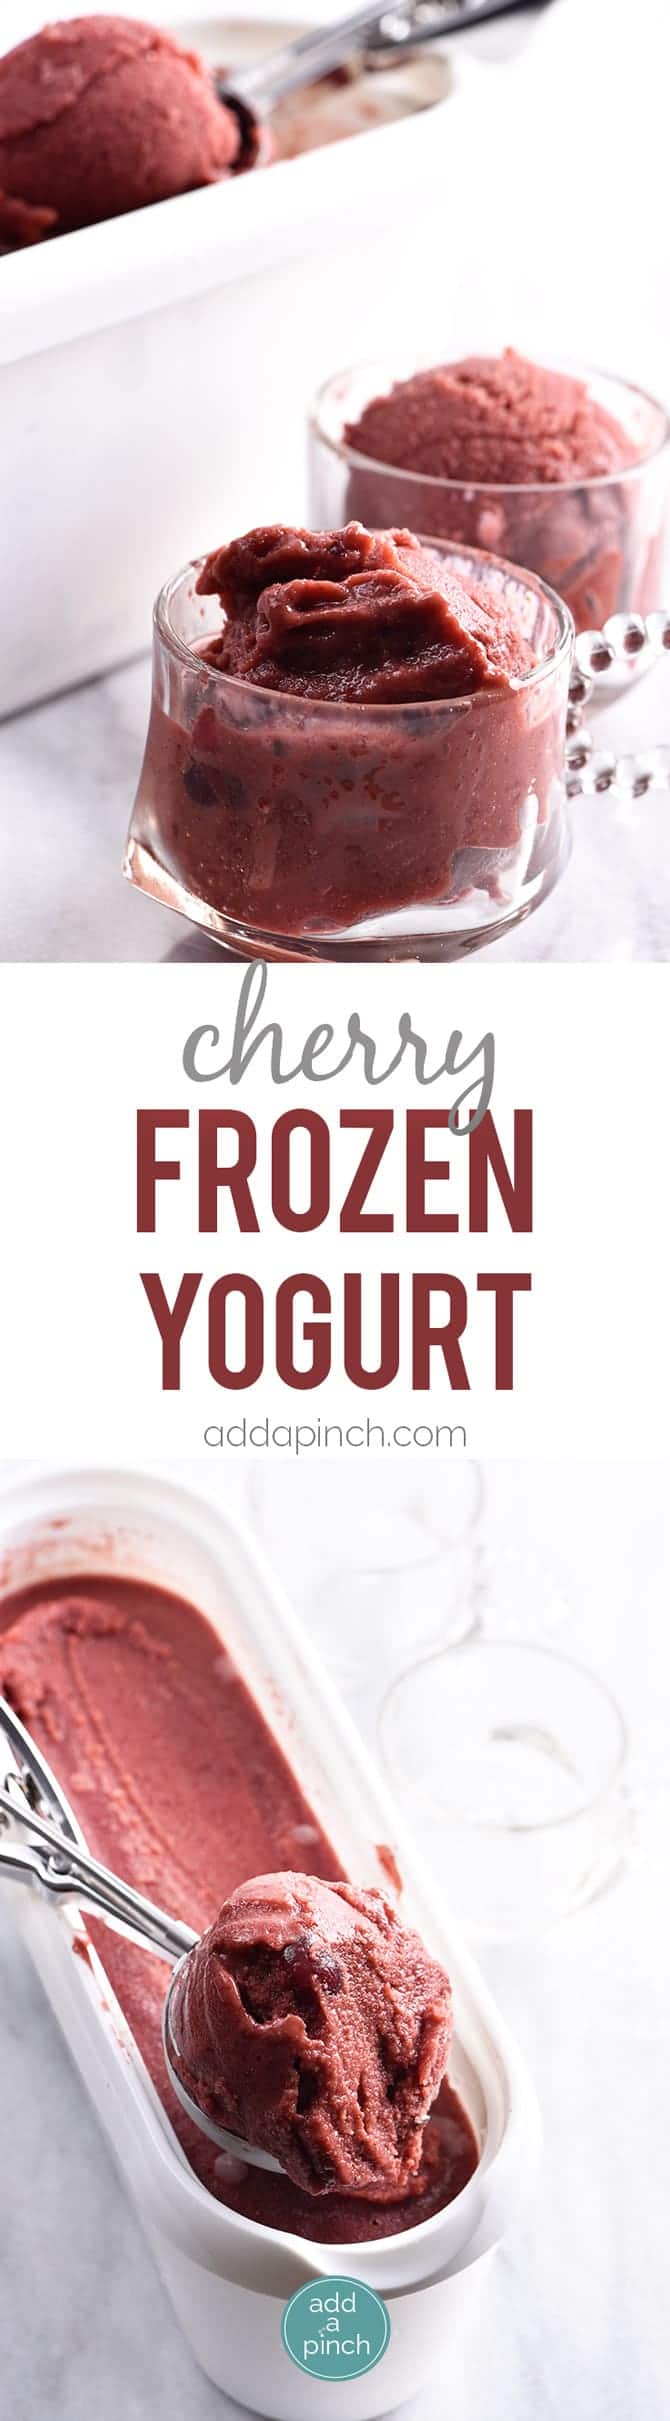 Cherry Frozen Yogurt Recipe - Cherry Frozen Yogurt makes a delicious and refreshing dessert in minutes! Ready in just 6 minutes! // addapinch.com